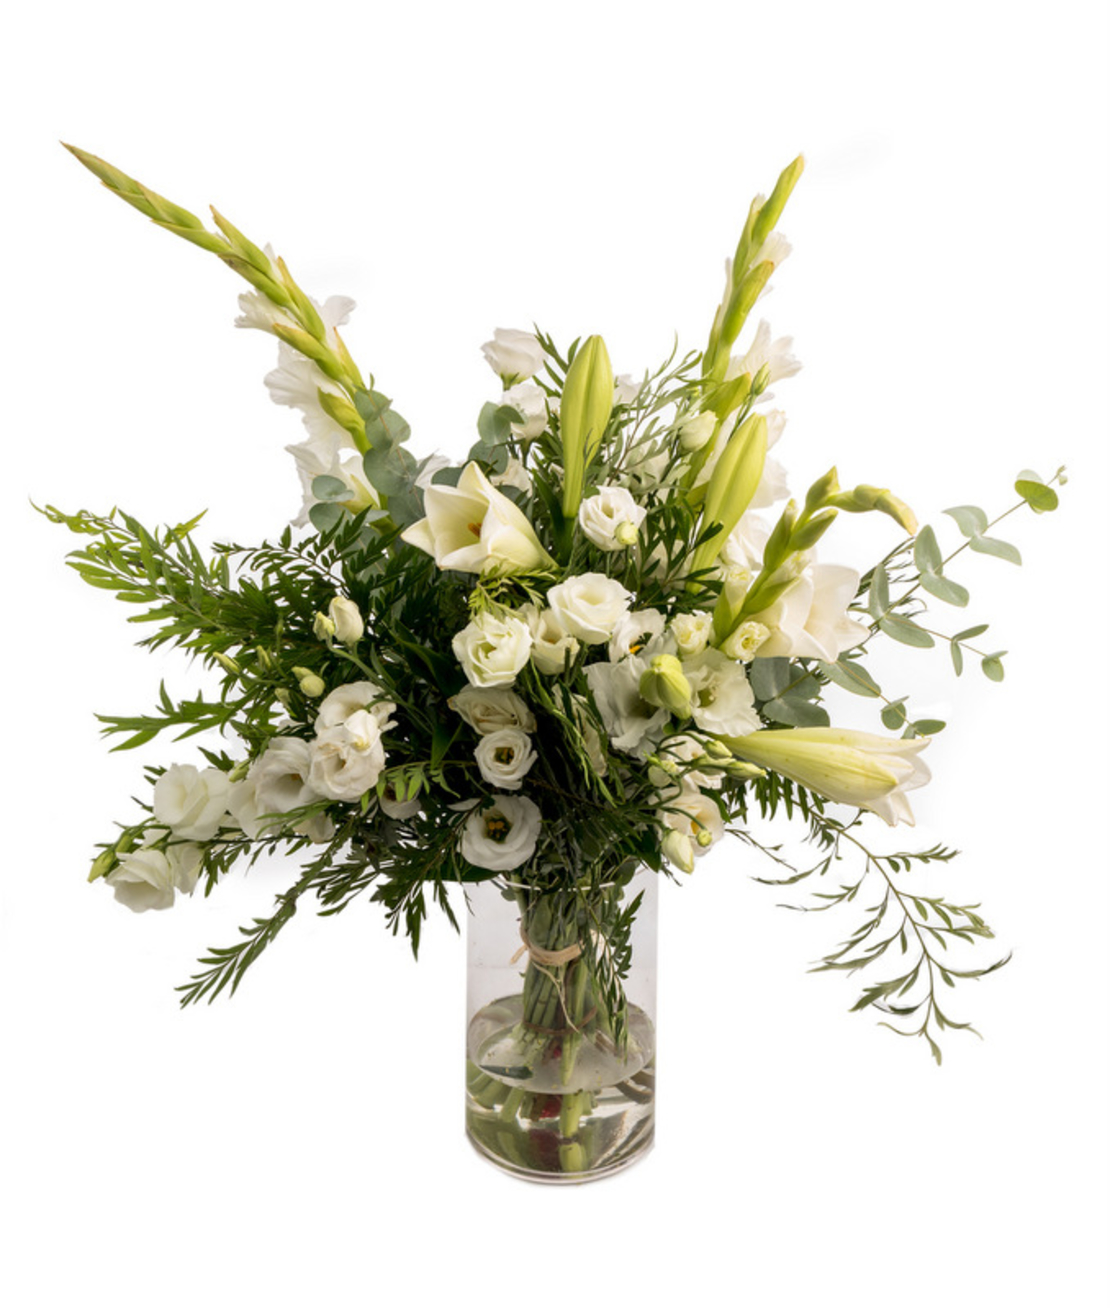 An elegant white bouquet